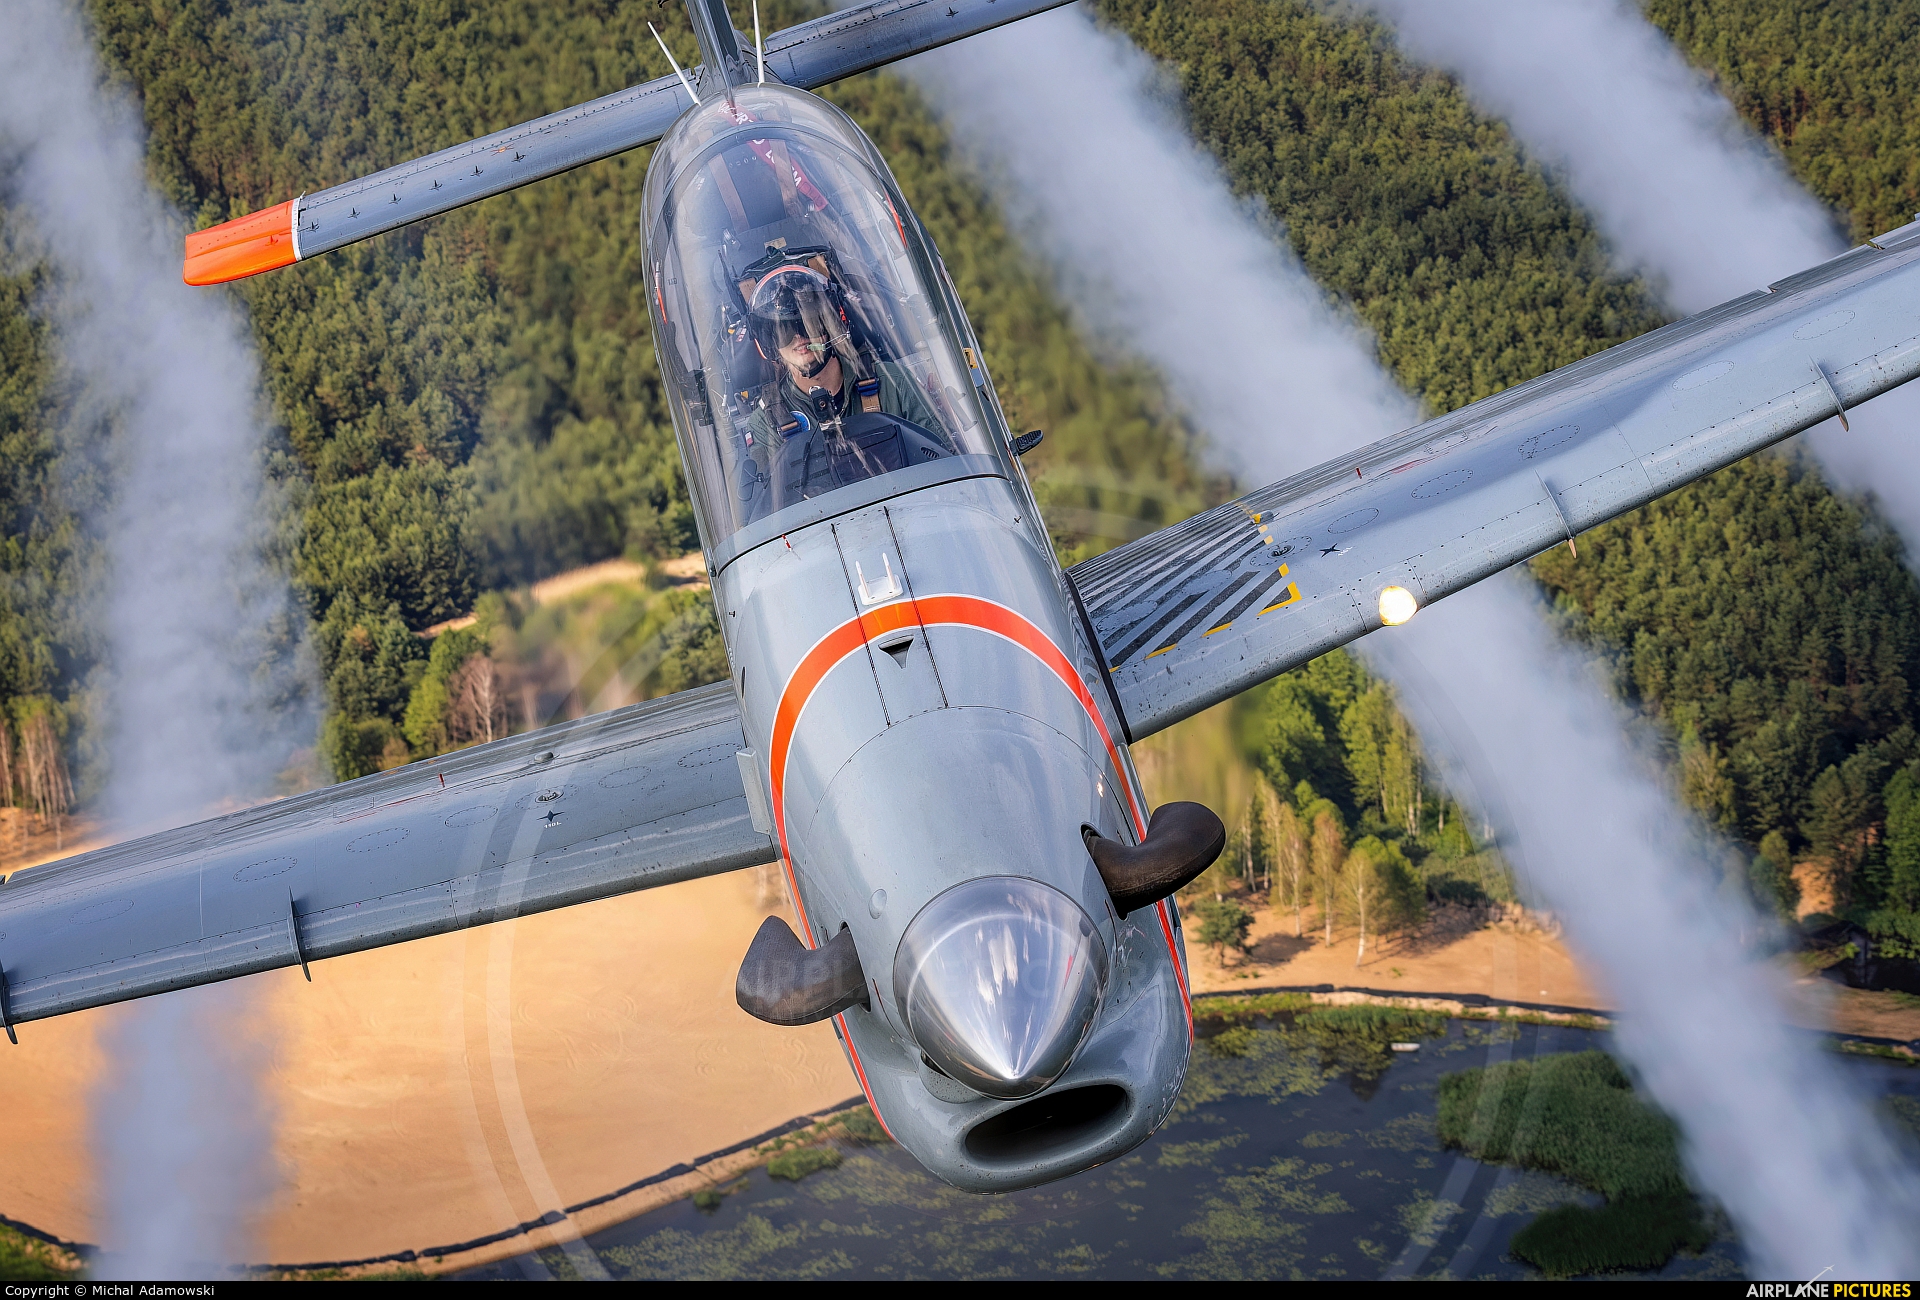 Poland - Air Force "Orlik Acrobatic Group" 044 aircraft at Off Airport - Poland